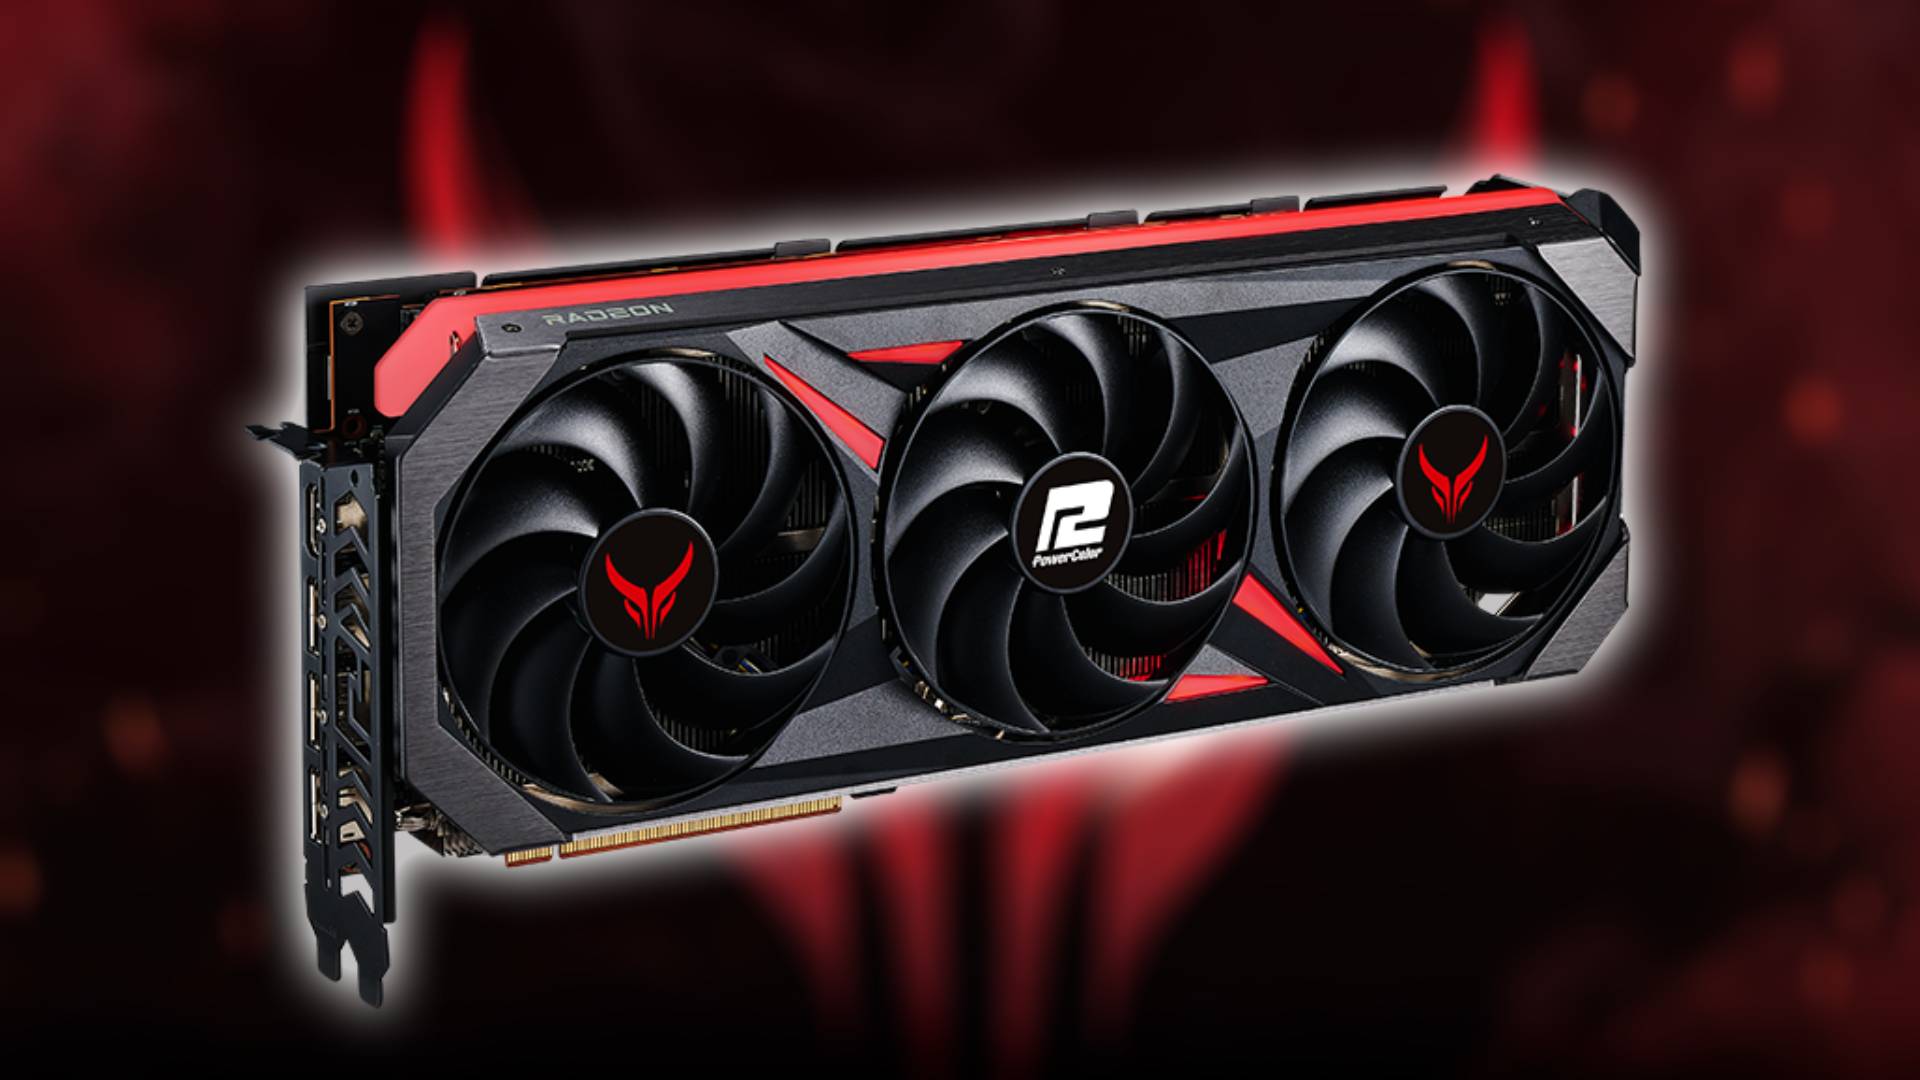 Stunning Leak Reveals AMD Radeon RX 7800 XT Graphics Card